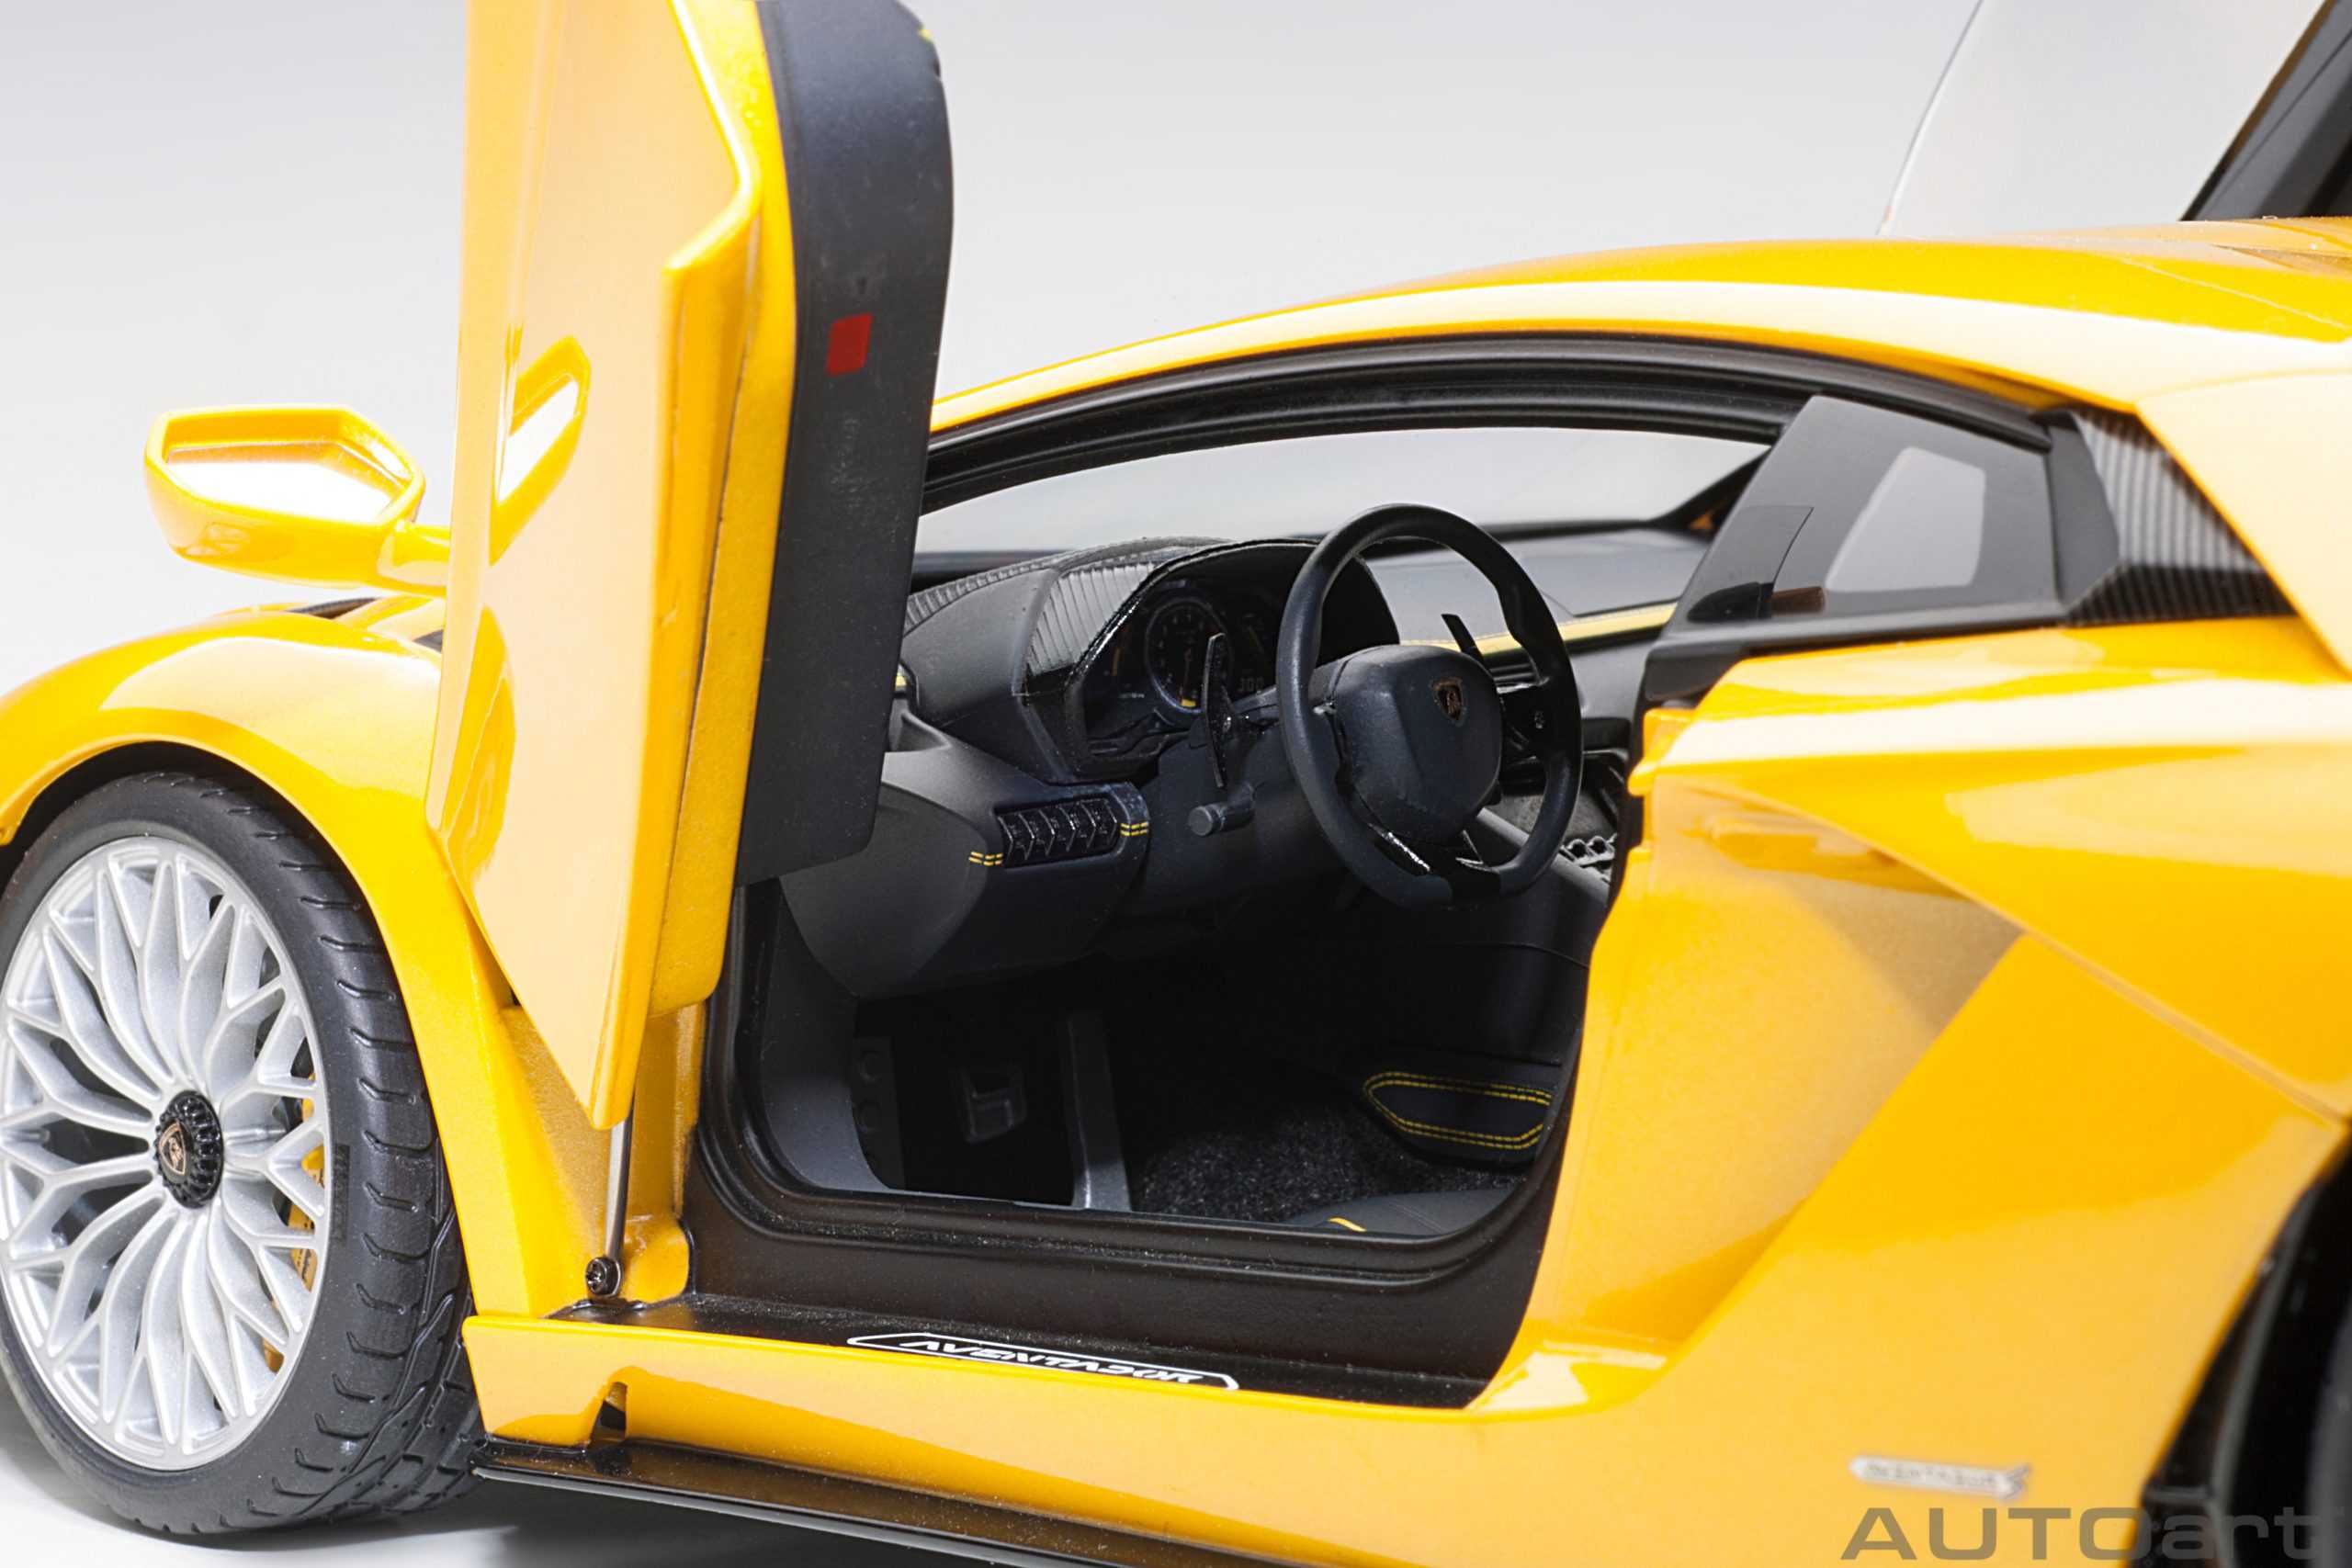 Model 1:18 AUTOart Lamborghini Aventador S 2017 yellow